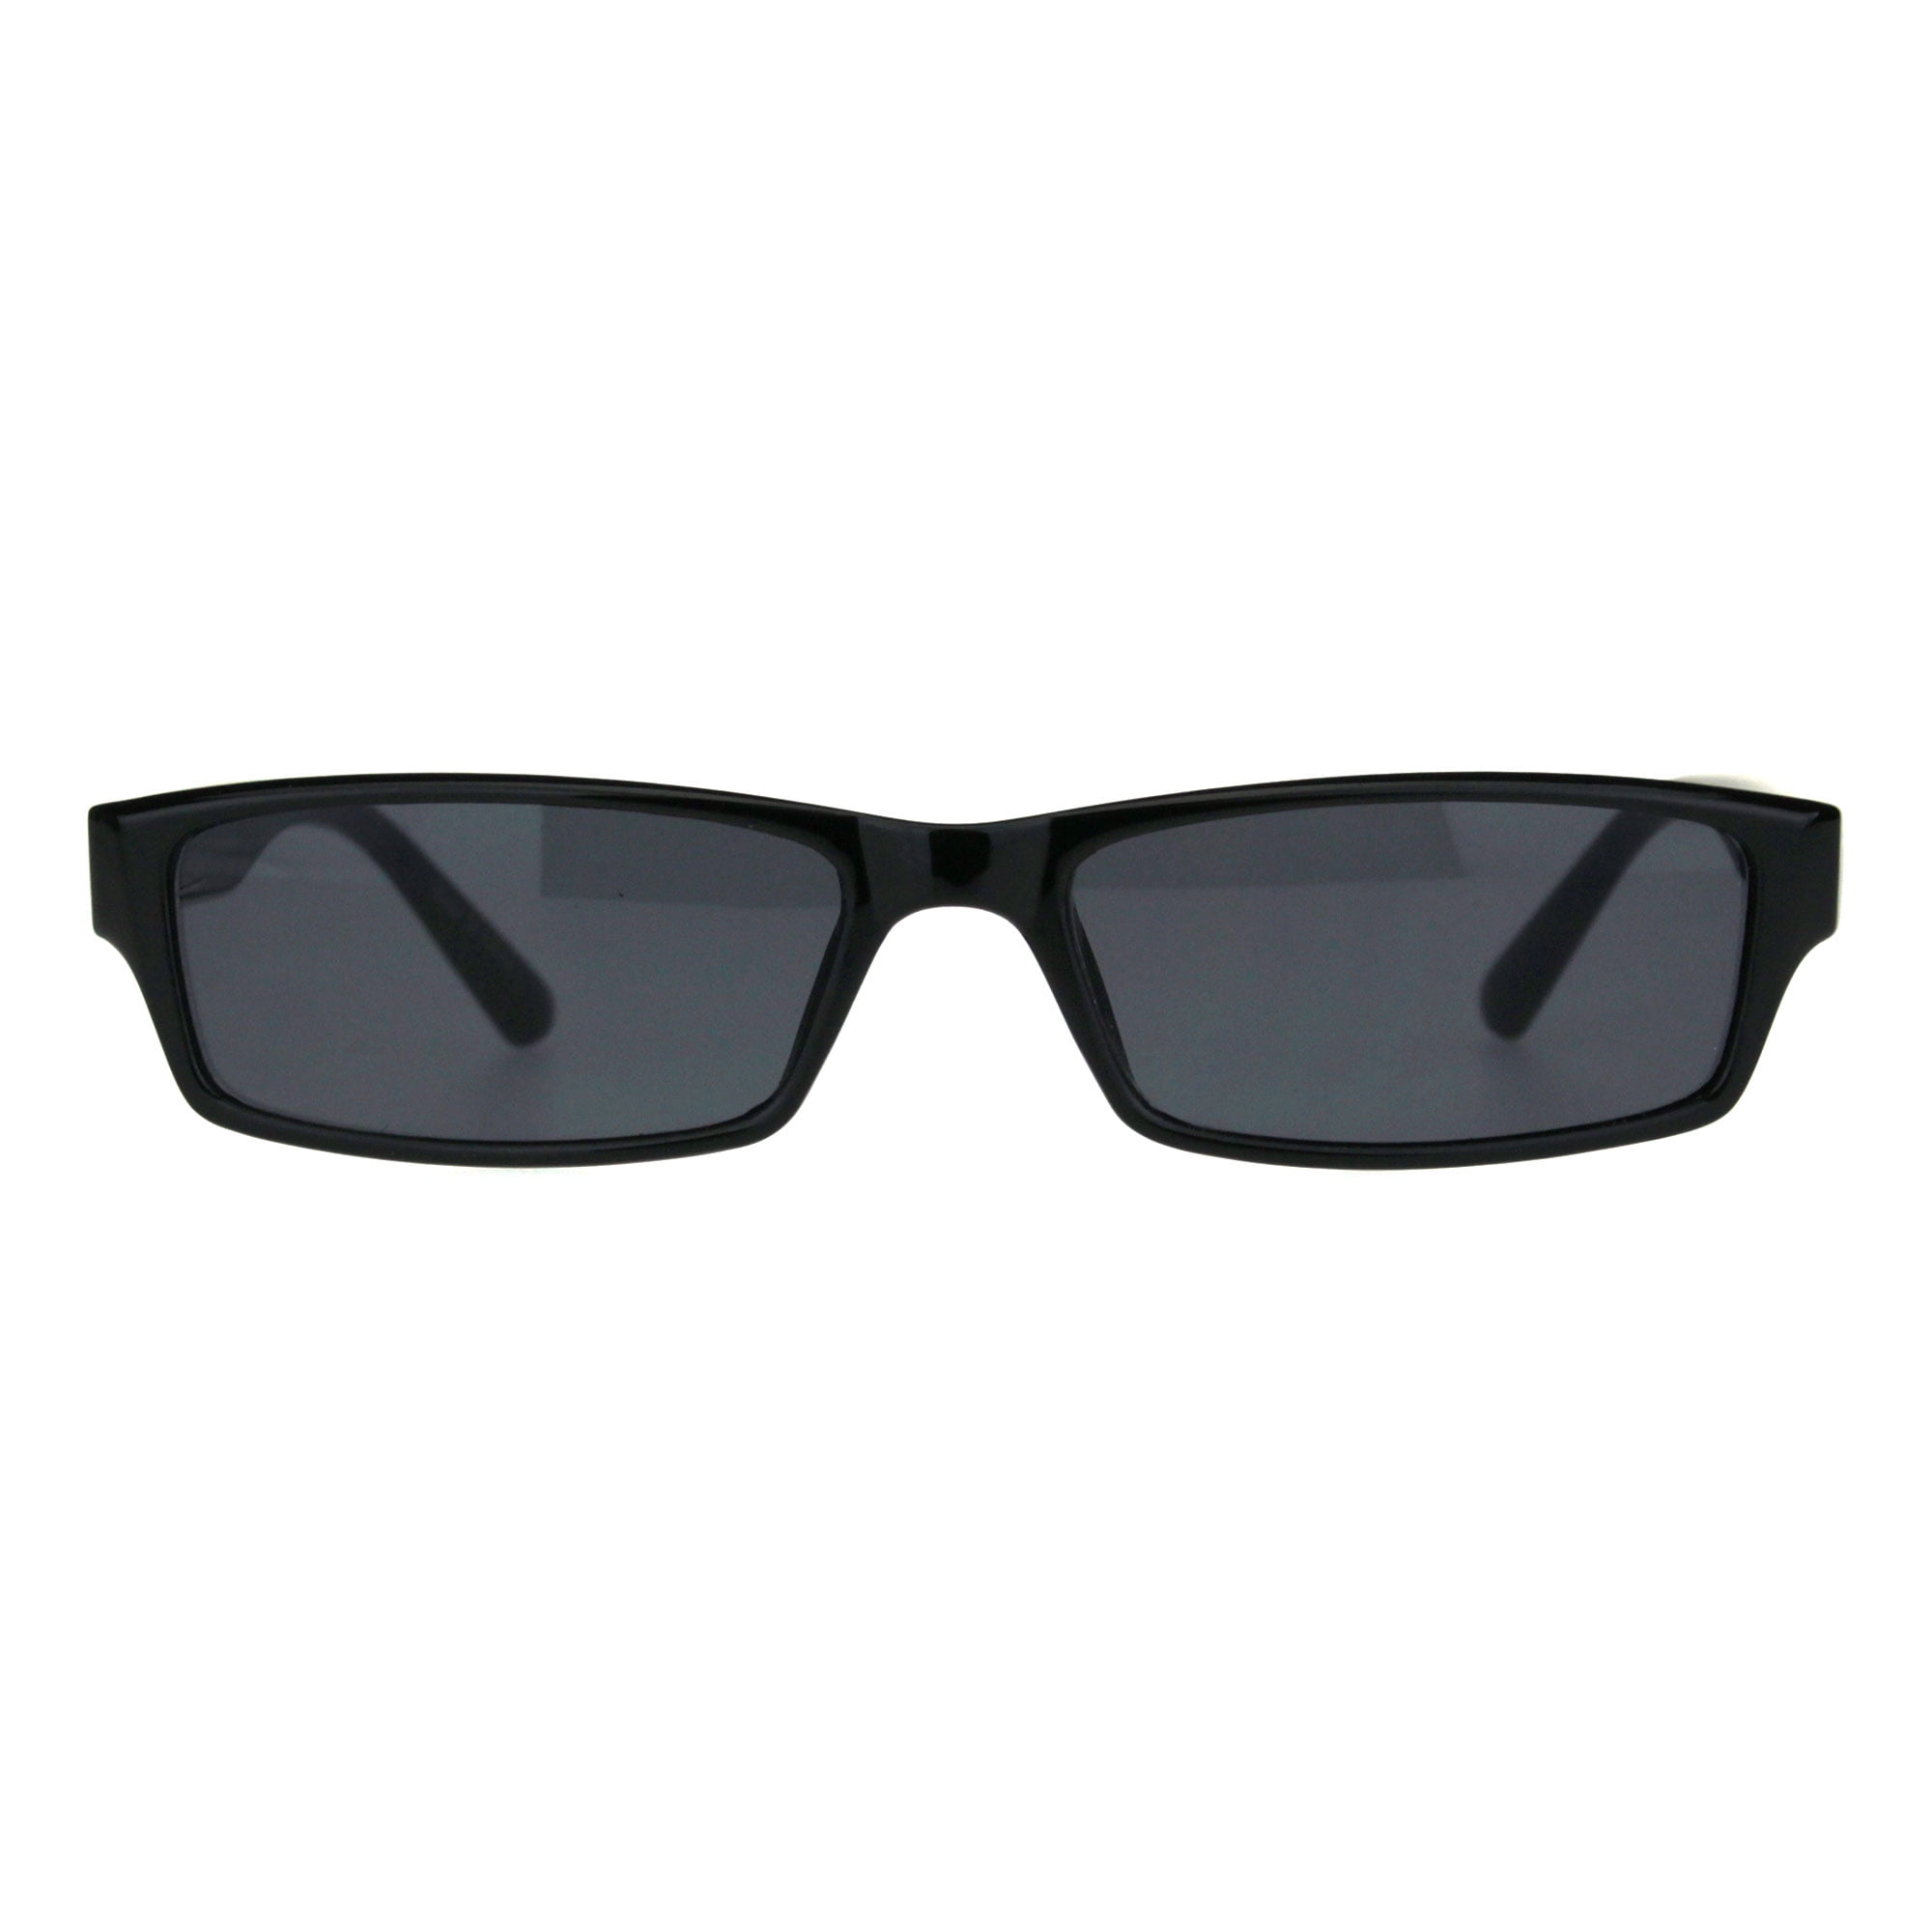 Ray Ban Predator 2 Sunglasses | Prescription Available | RX Safety